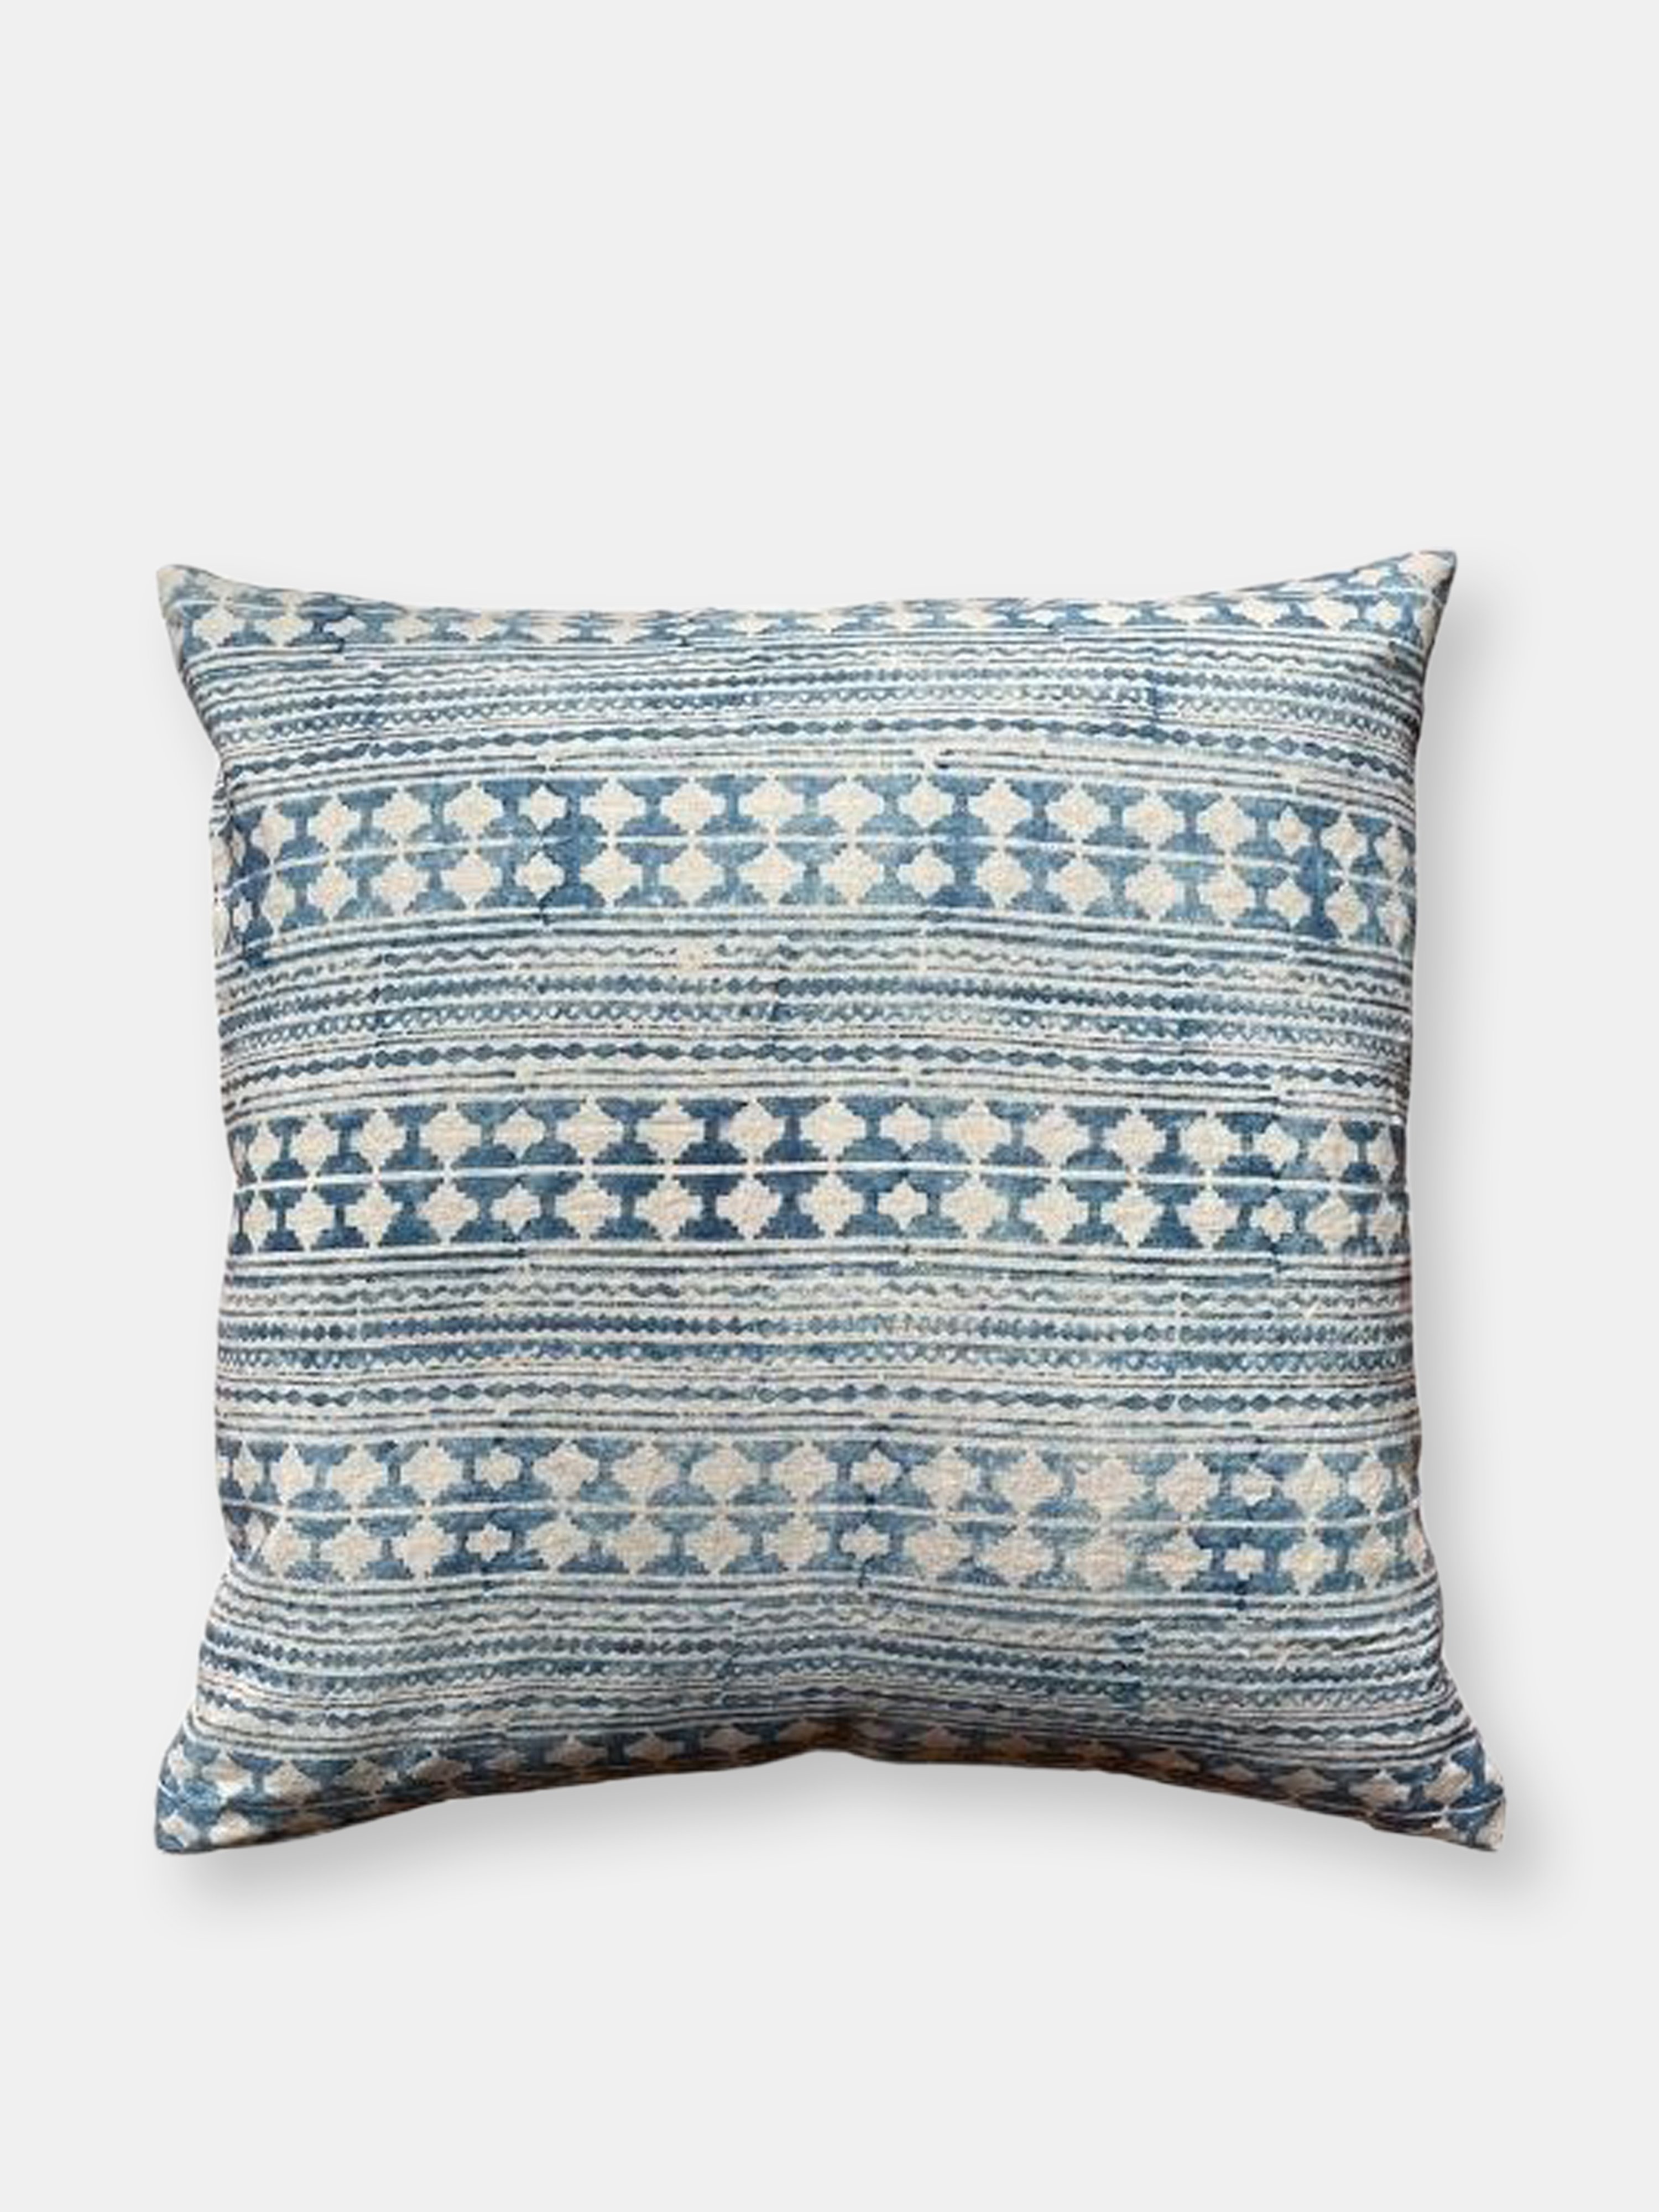 Alamwar Totonac Indigo Decorative Pillow Cover In Blue